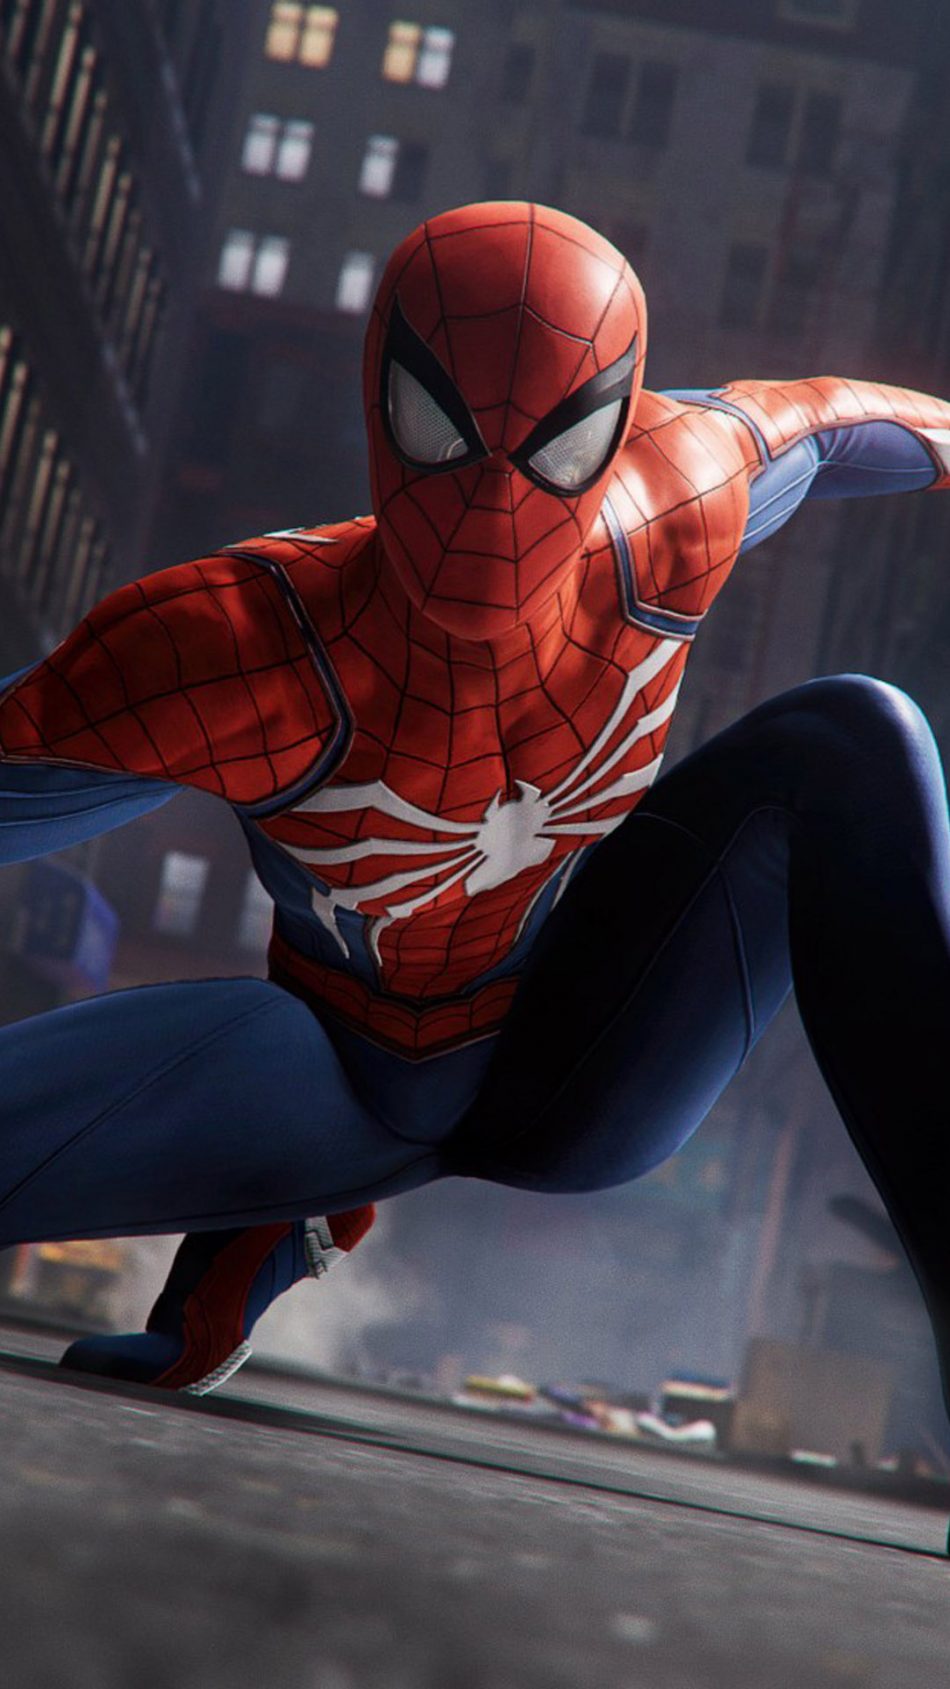 Spider-man Playstation 4 Game 4K Ultra HD Mobile Wallpaper